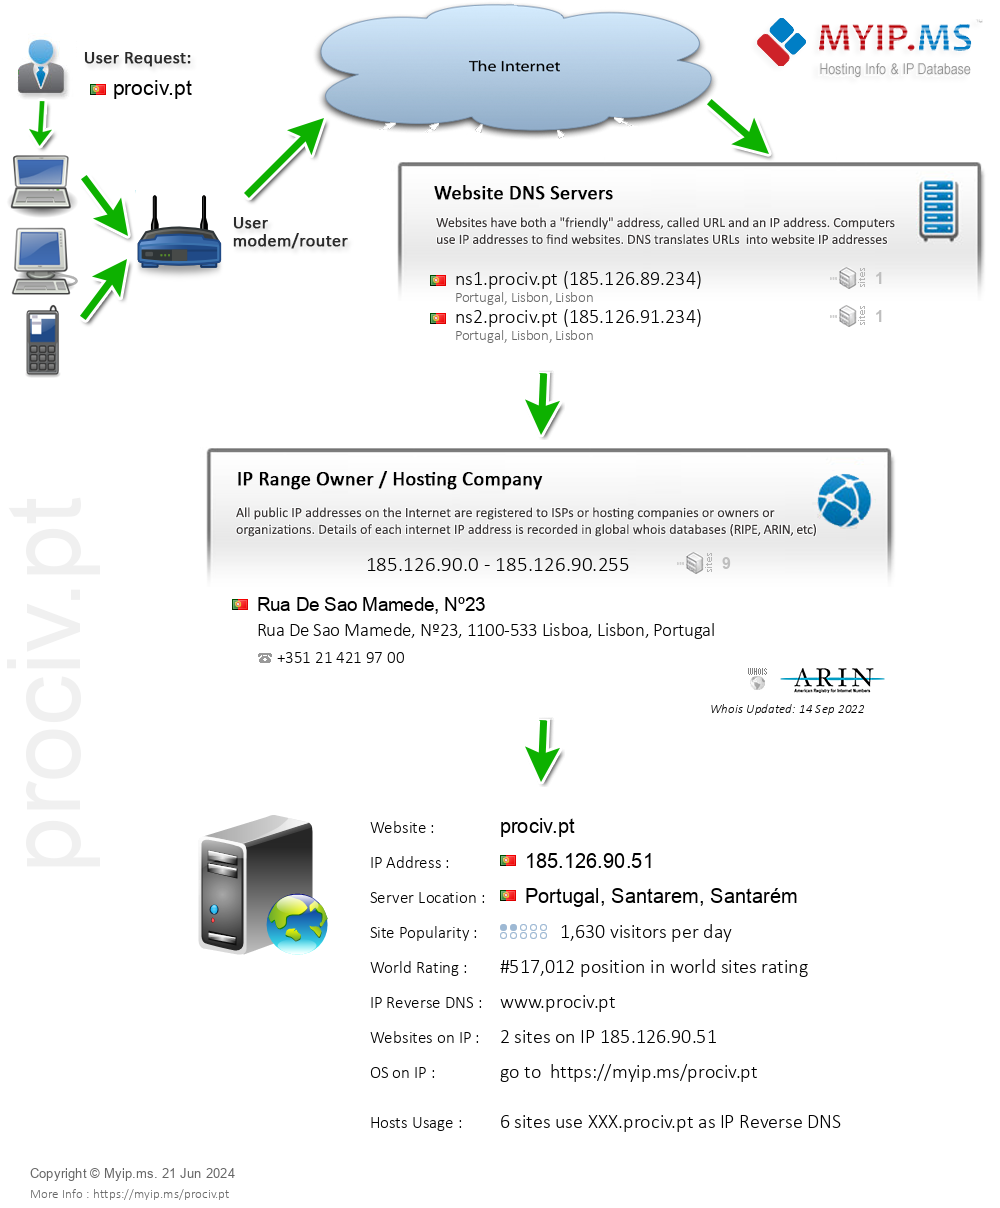 Prociv.pt - Website Hosting Visual IP Diagram